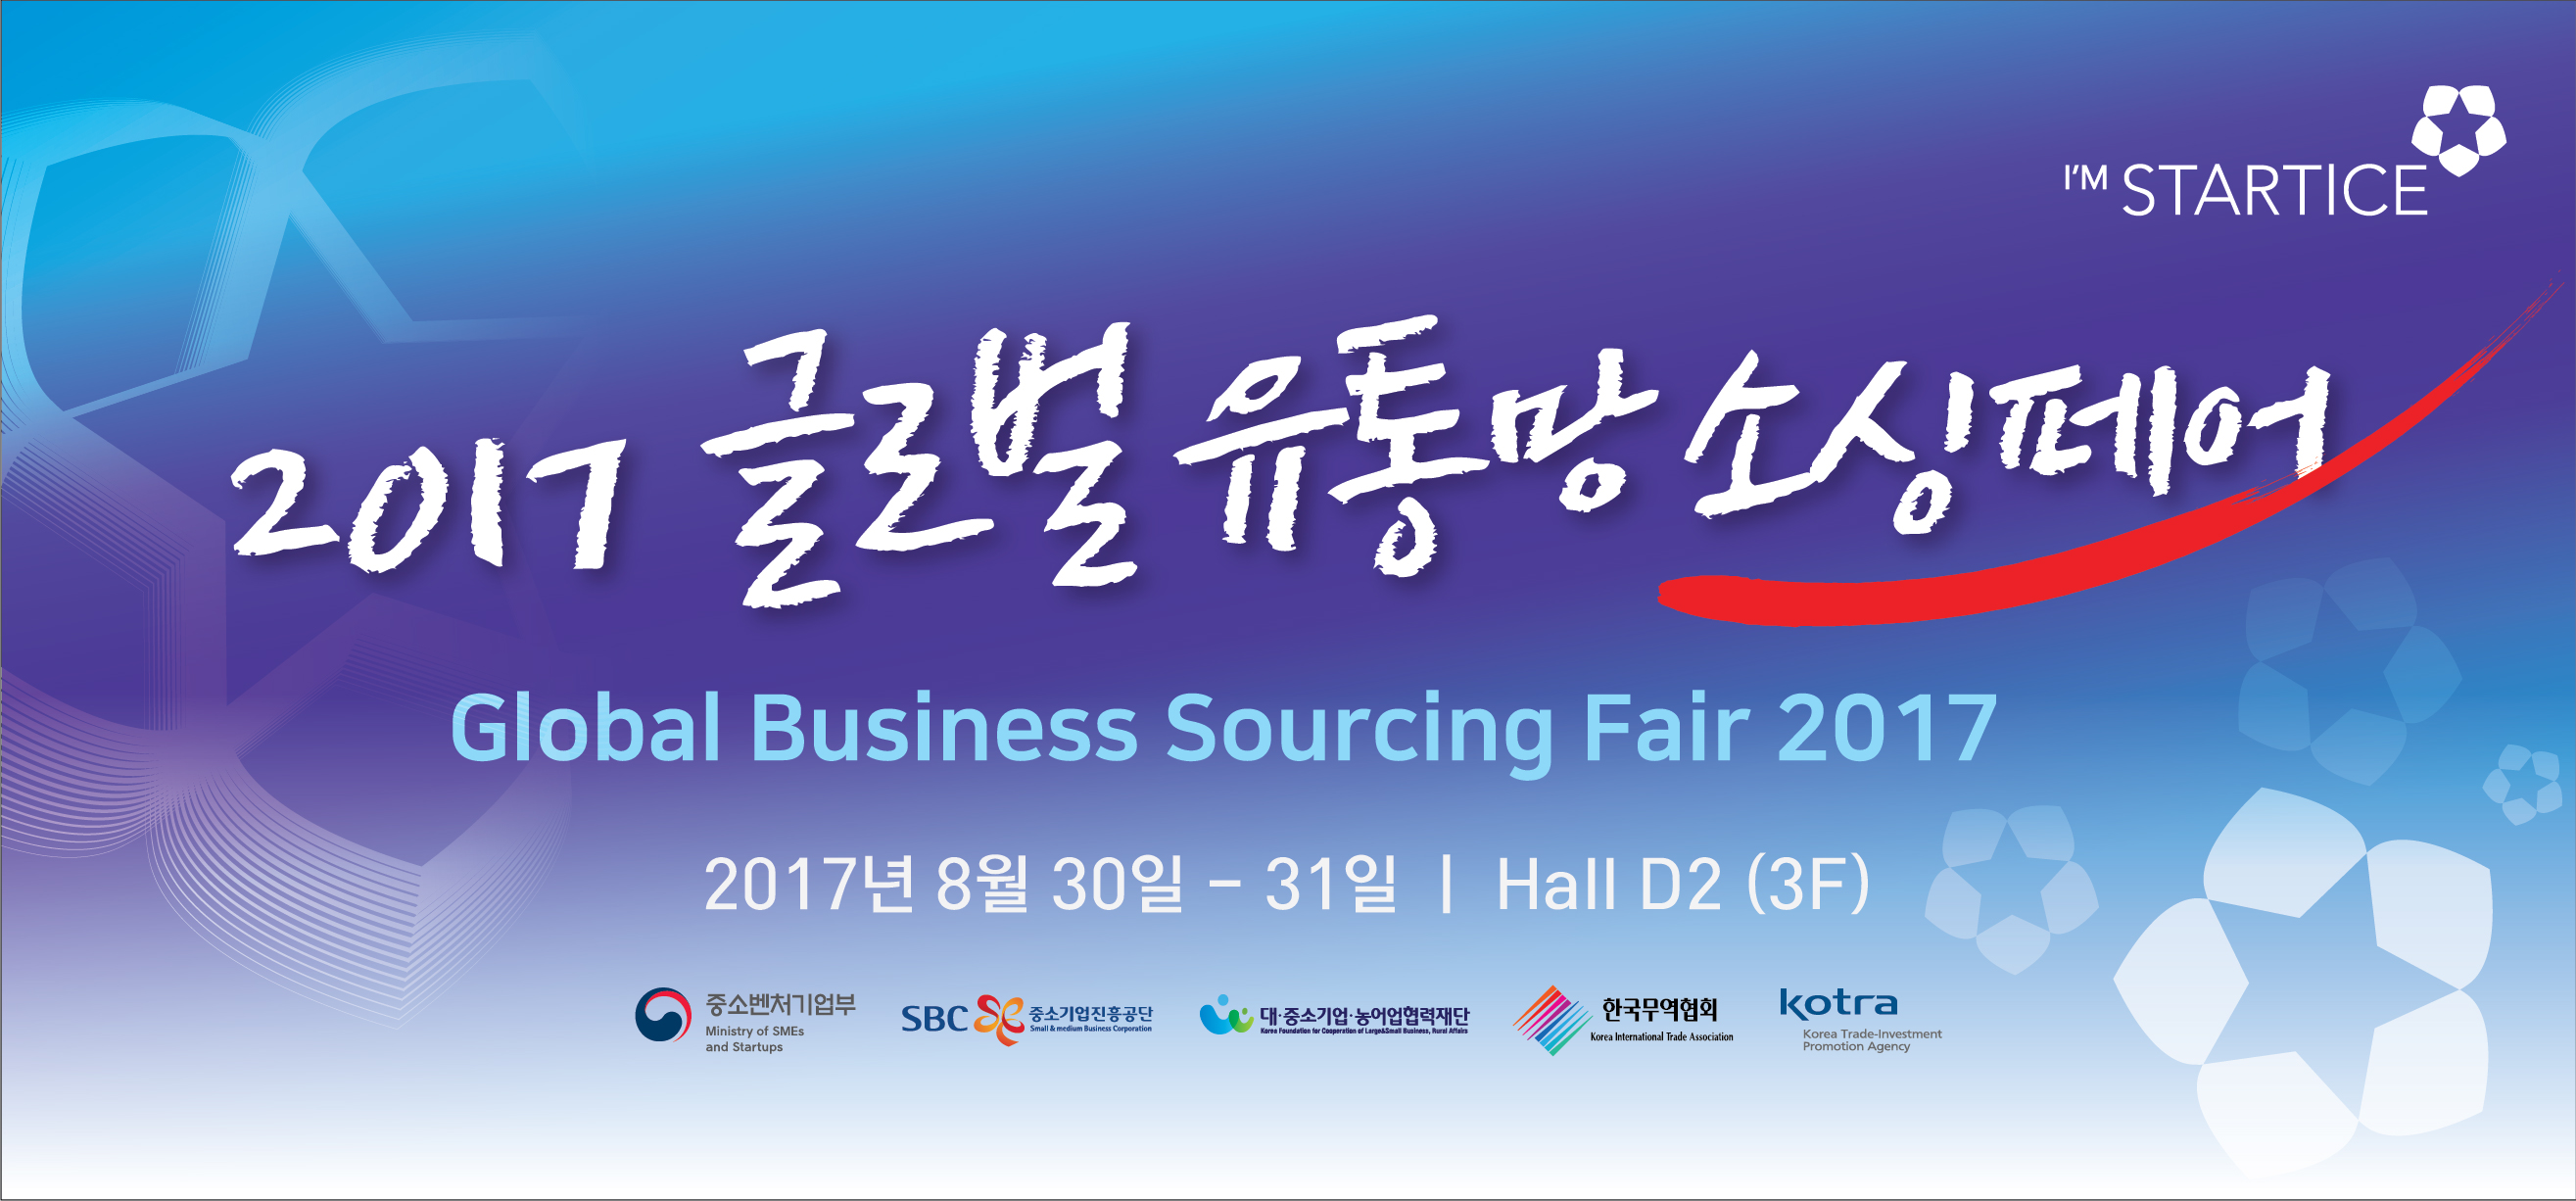 Global Business Sourcing Fair August 2017 Banner